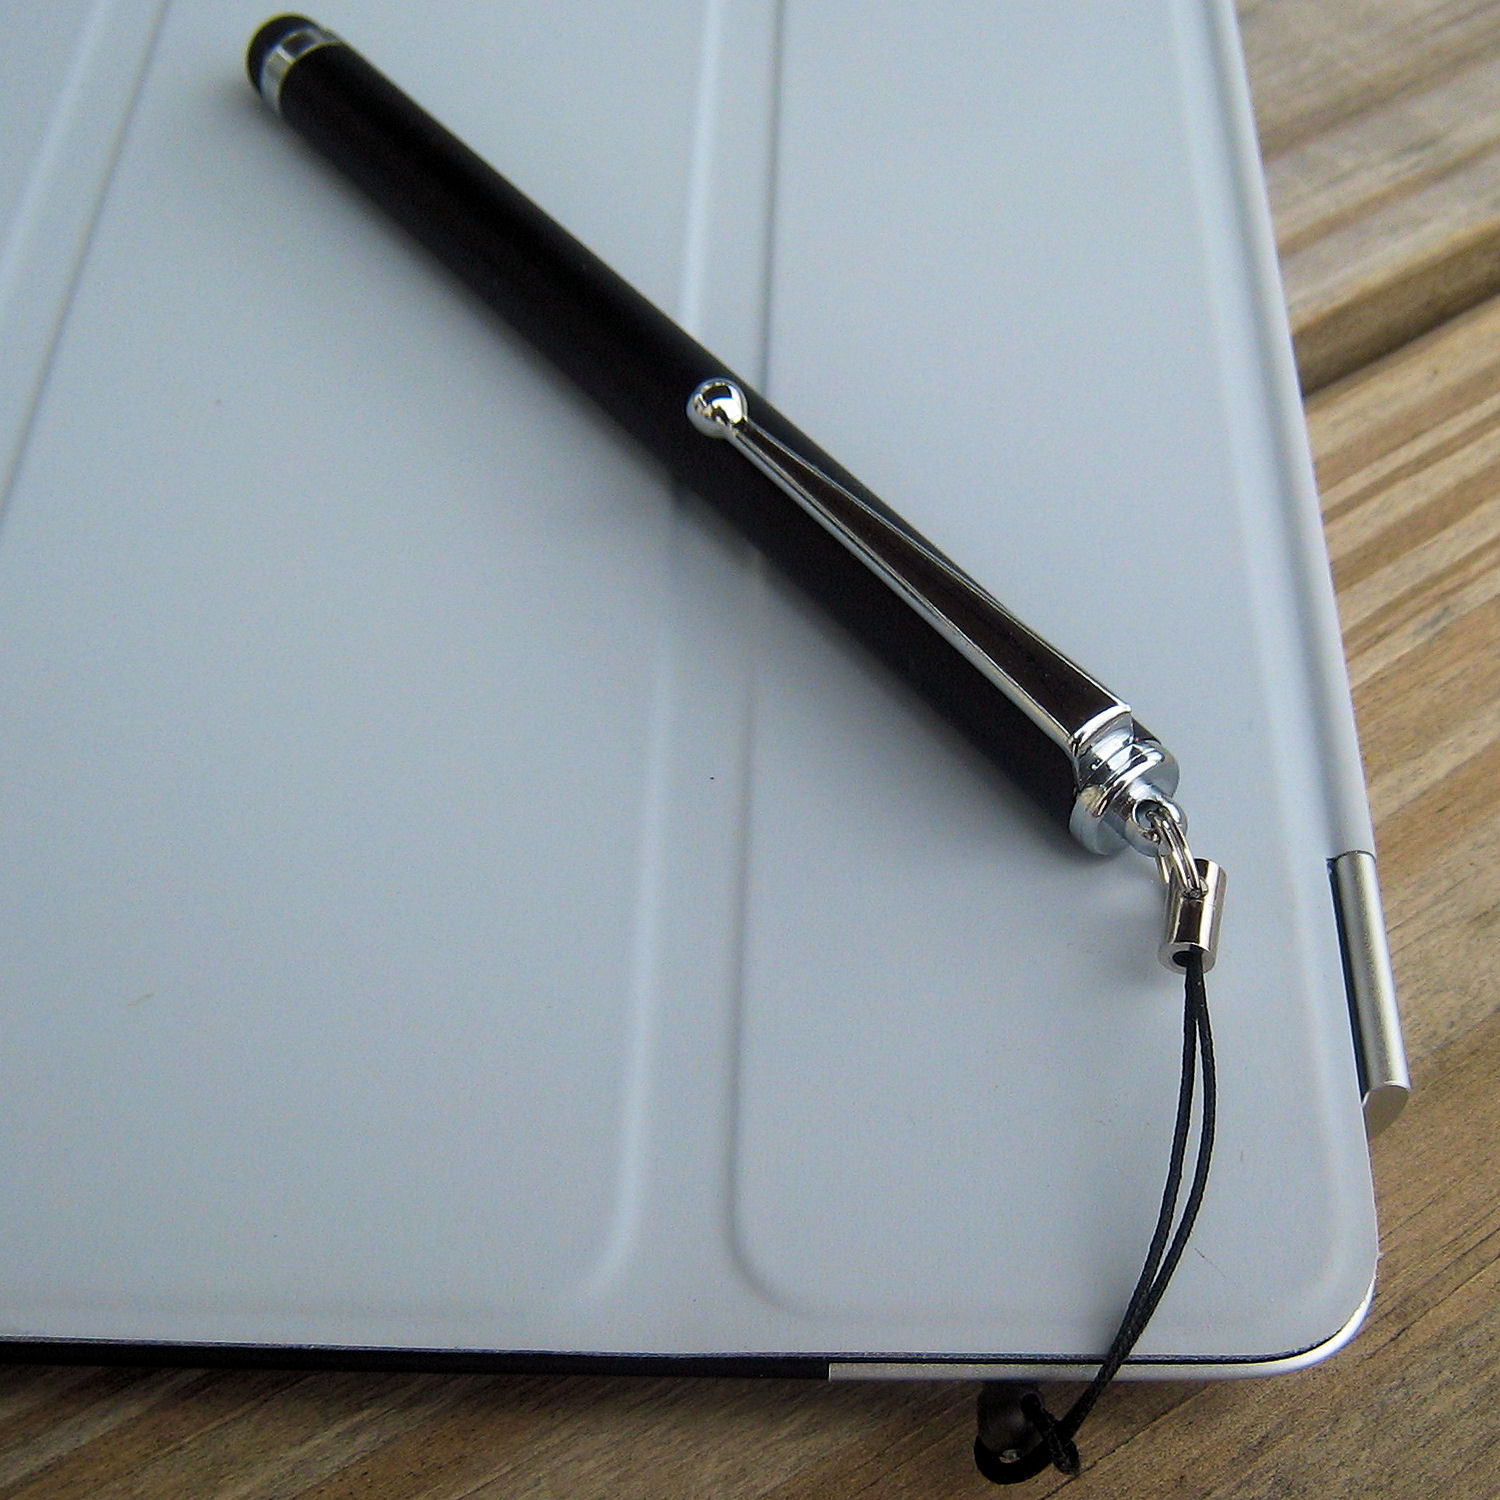 Gomadic Precision Tip Capacitive Stylus Pen designed for the Samsung SCH-R900 (Black Color) - Lifetime Warranty